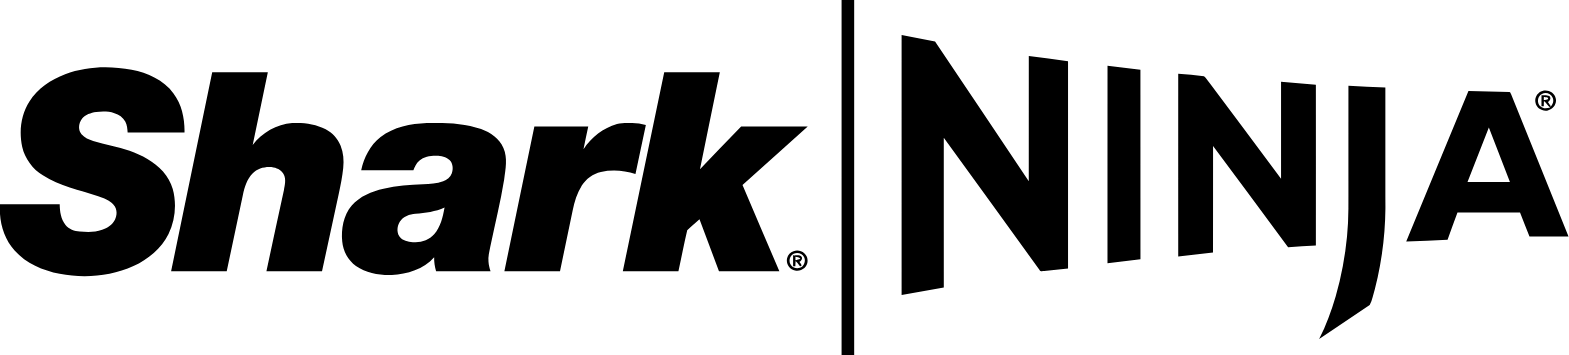 SharkNinja logo large (transparent PNG)